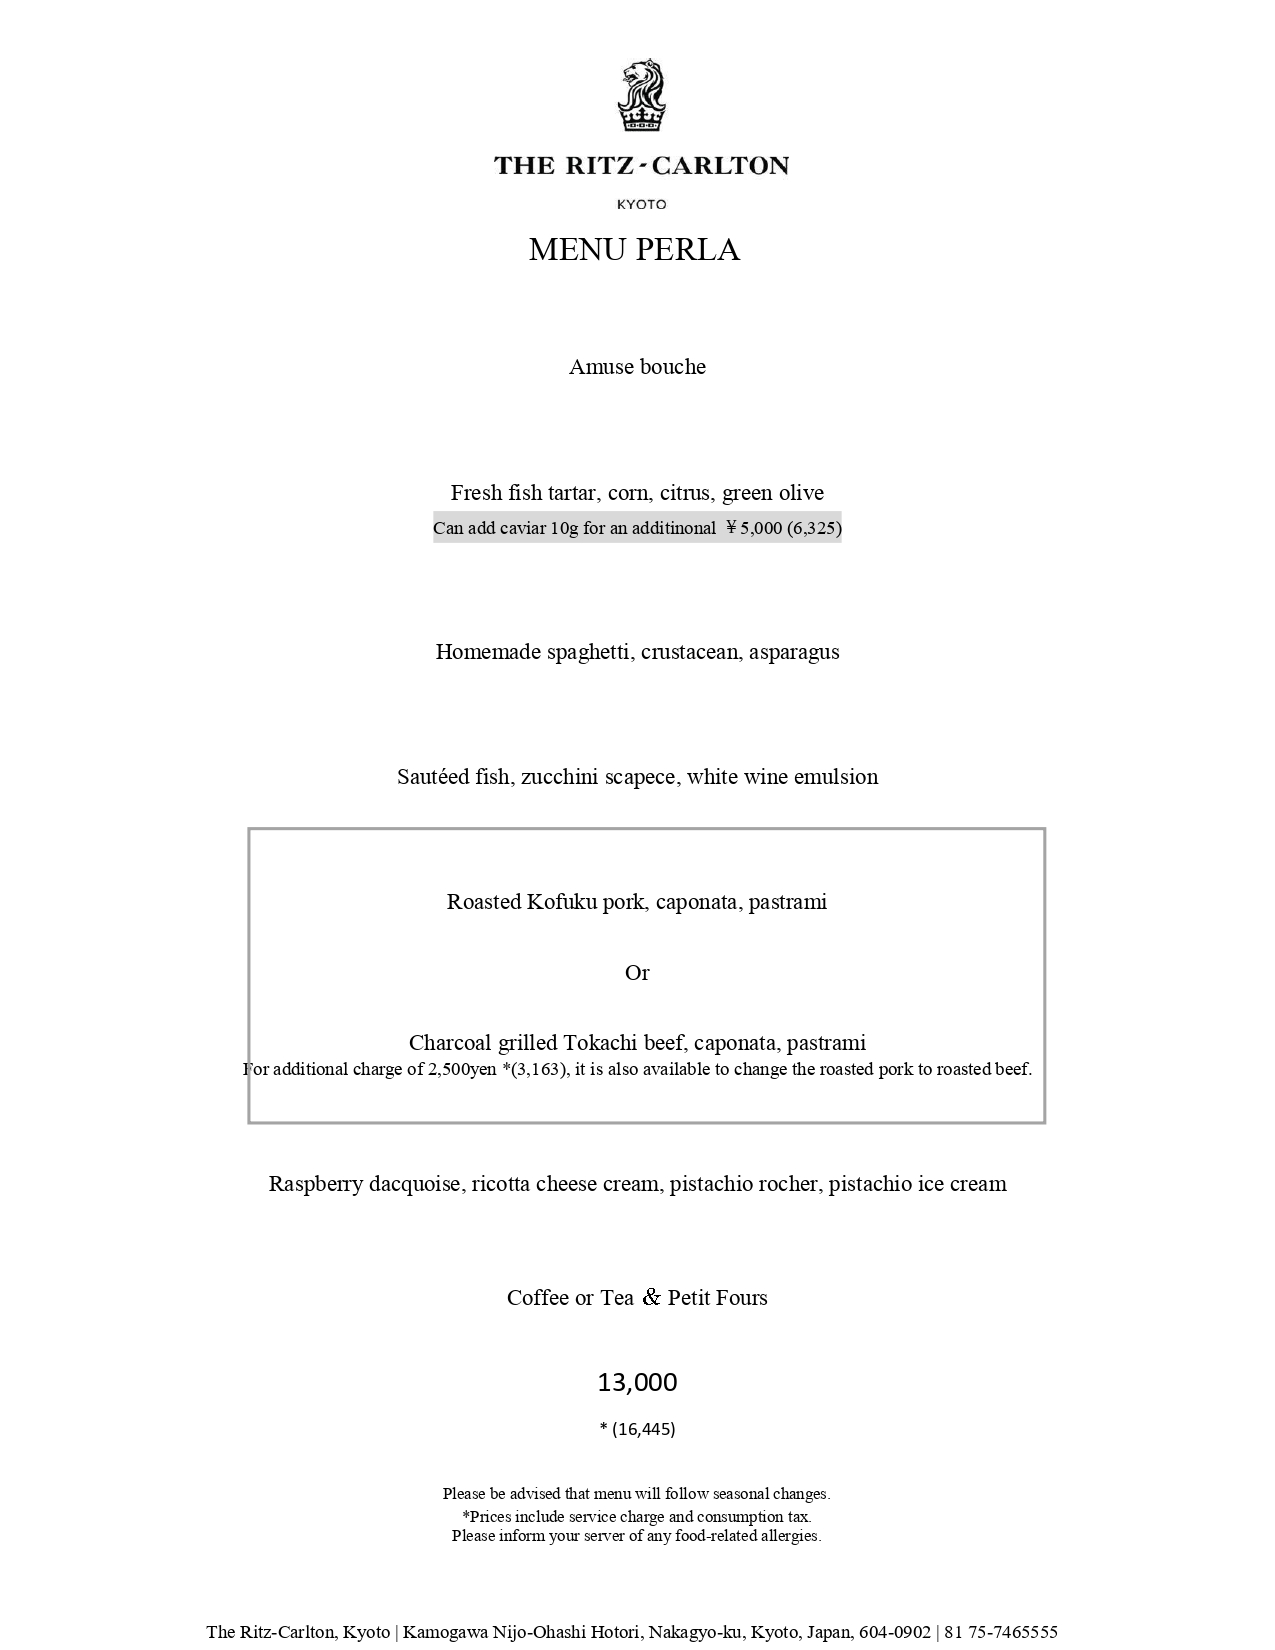 La Locanda dinner menu first page.